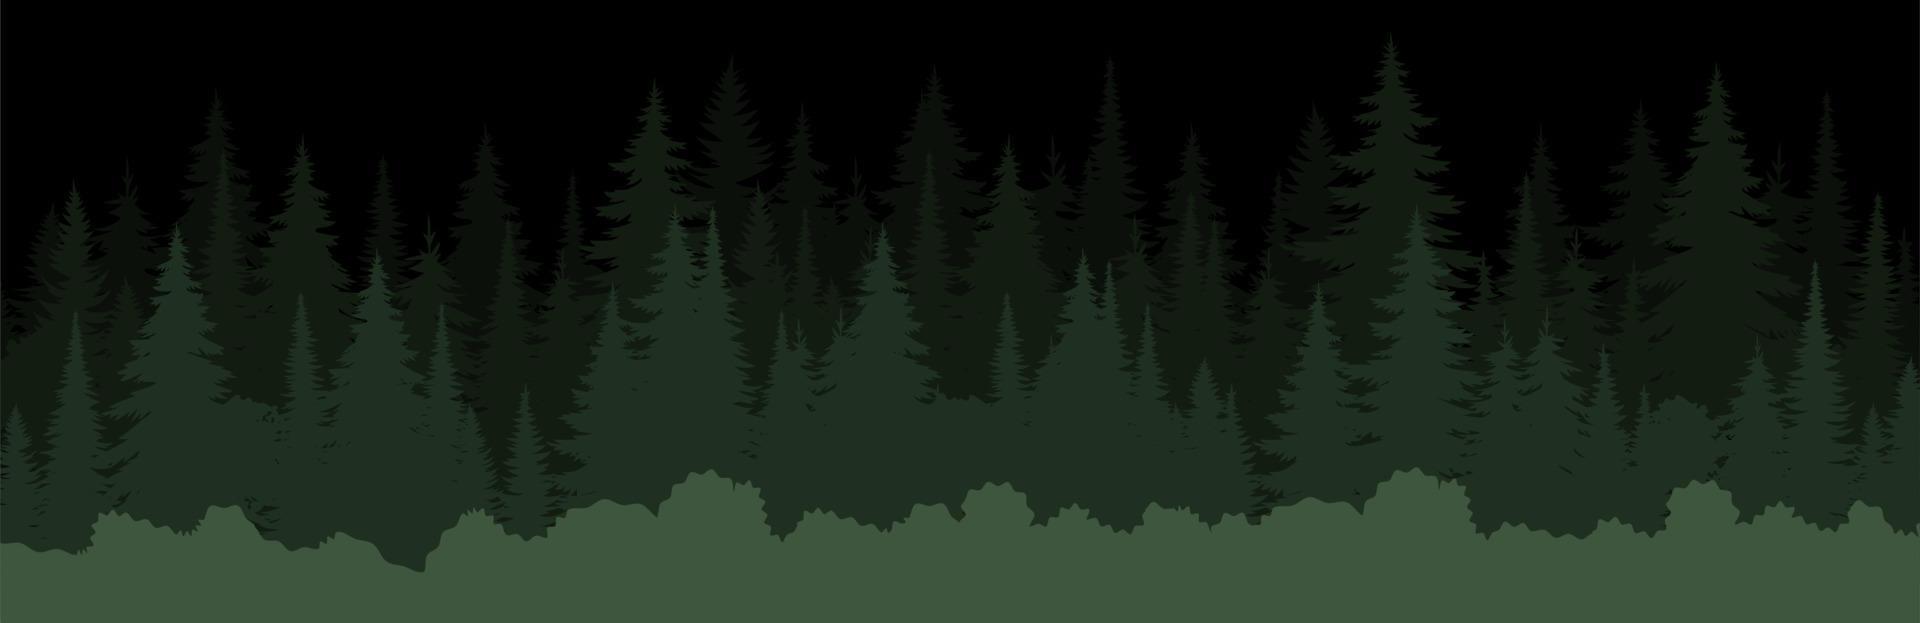 textura de fondo de bosque de montañas vectoriales, silueta de bosque de coníferas, vector. árboles de noche, piceas, abetos. paisaje horizontal en capas. vector